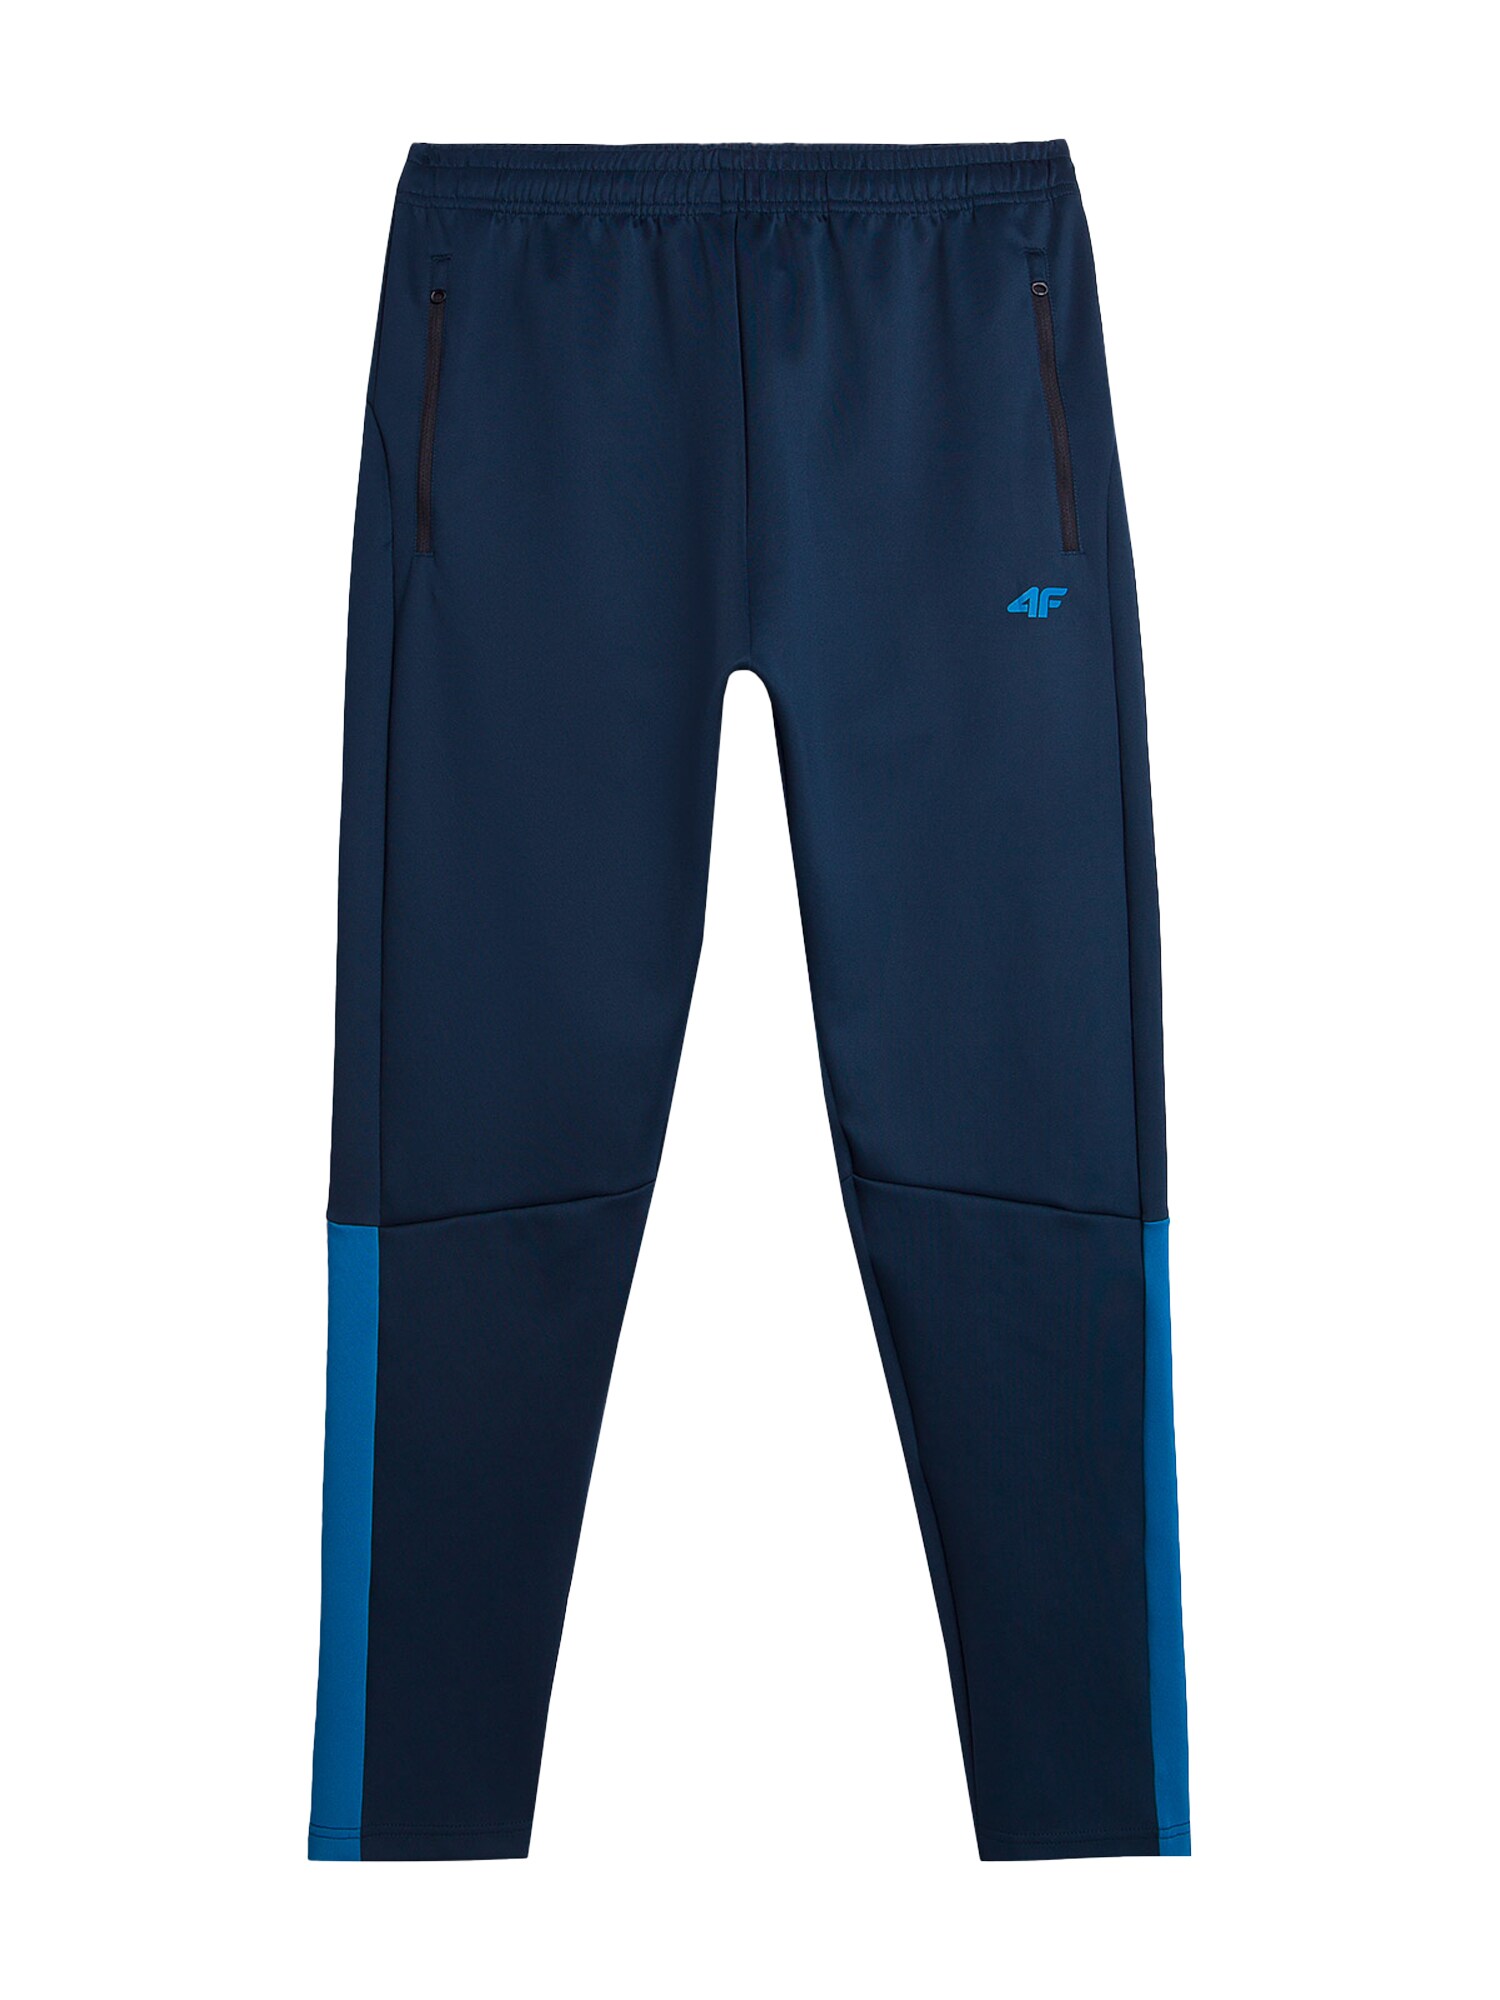 4F Sportinės kelnės mėlyna / tamsiai mėlyna